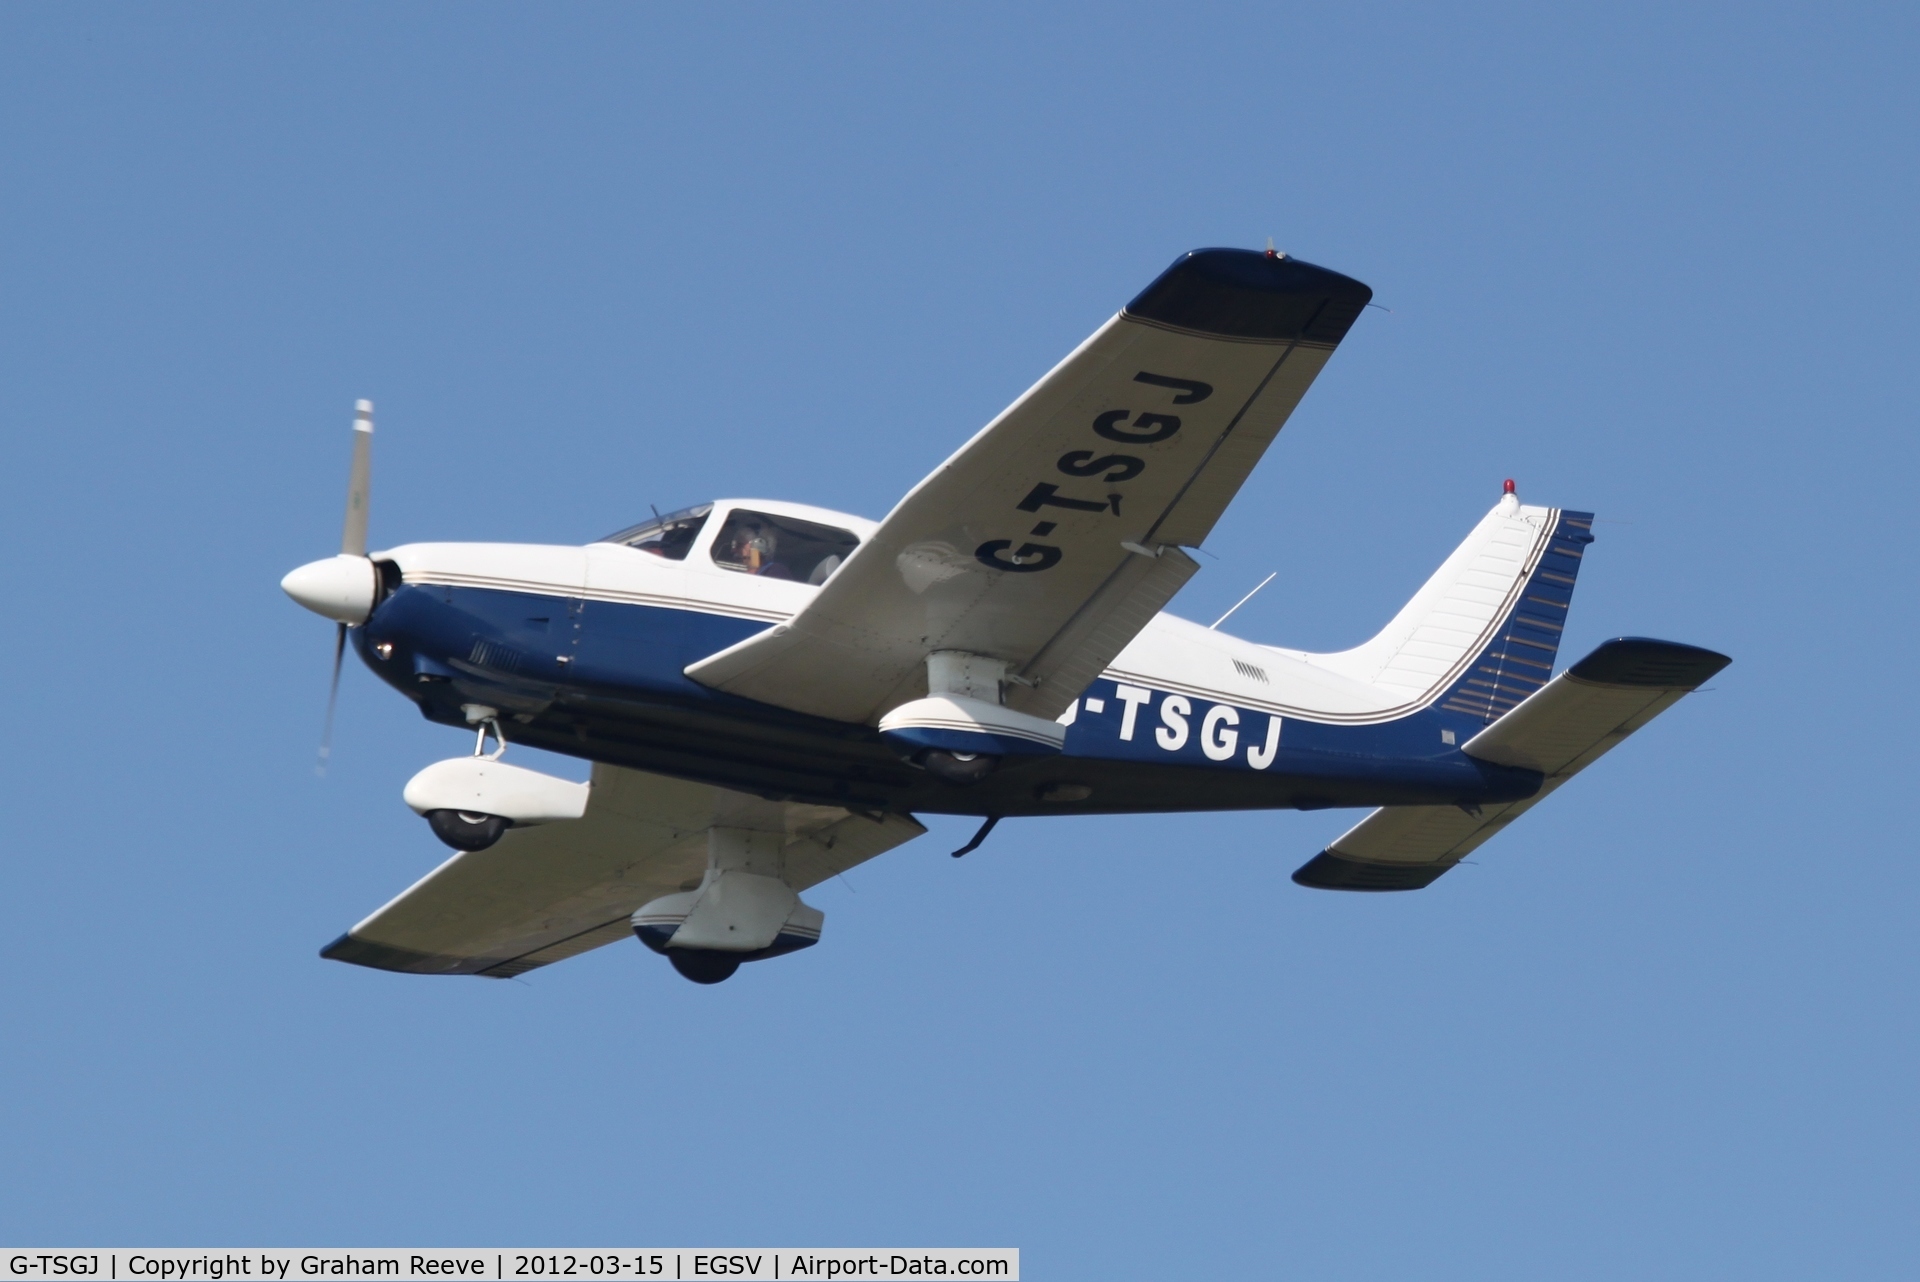 G-TSGJ, 1980 Piper PA-28-181 Cherokee Archer II C/N 28-8090109, Over head at Old Buckenham.